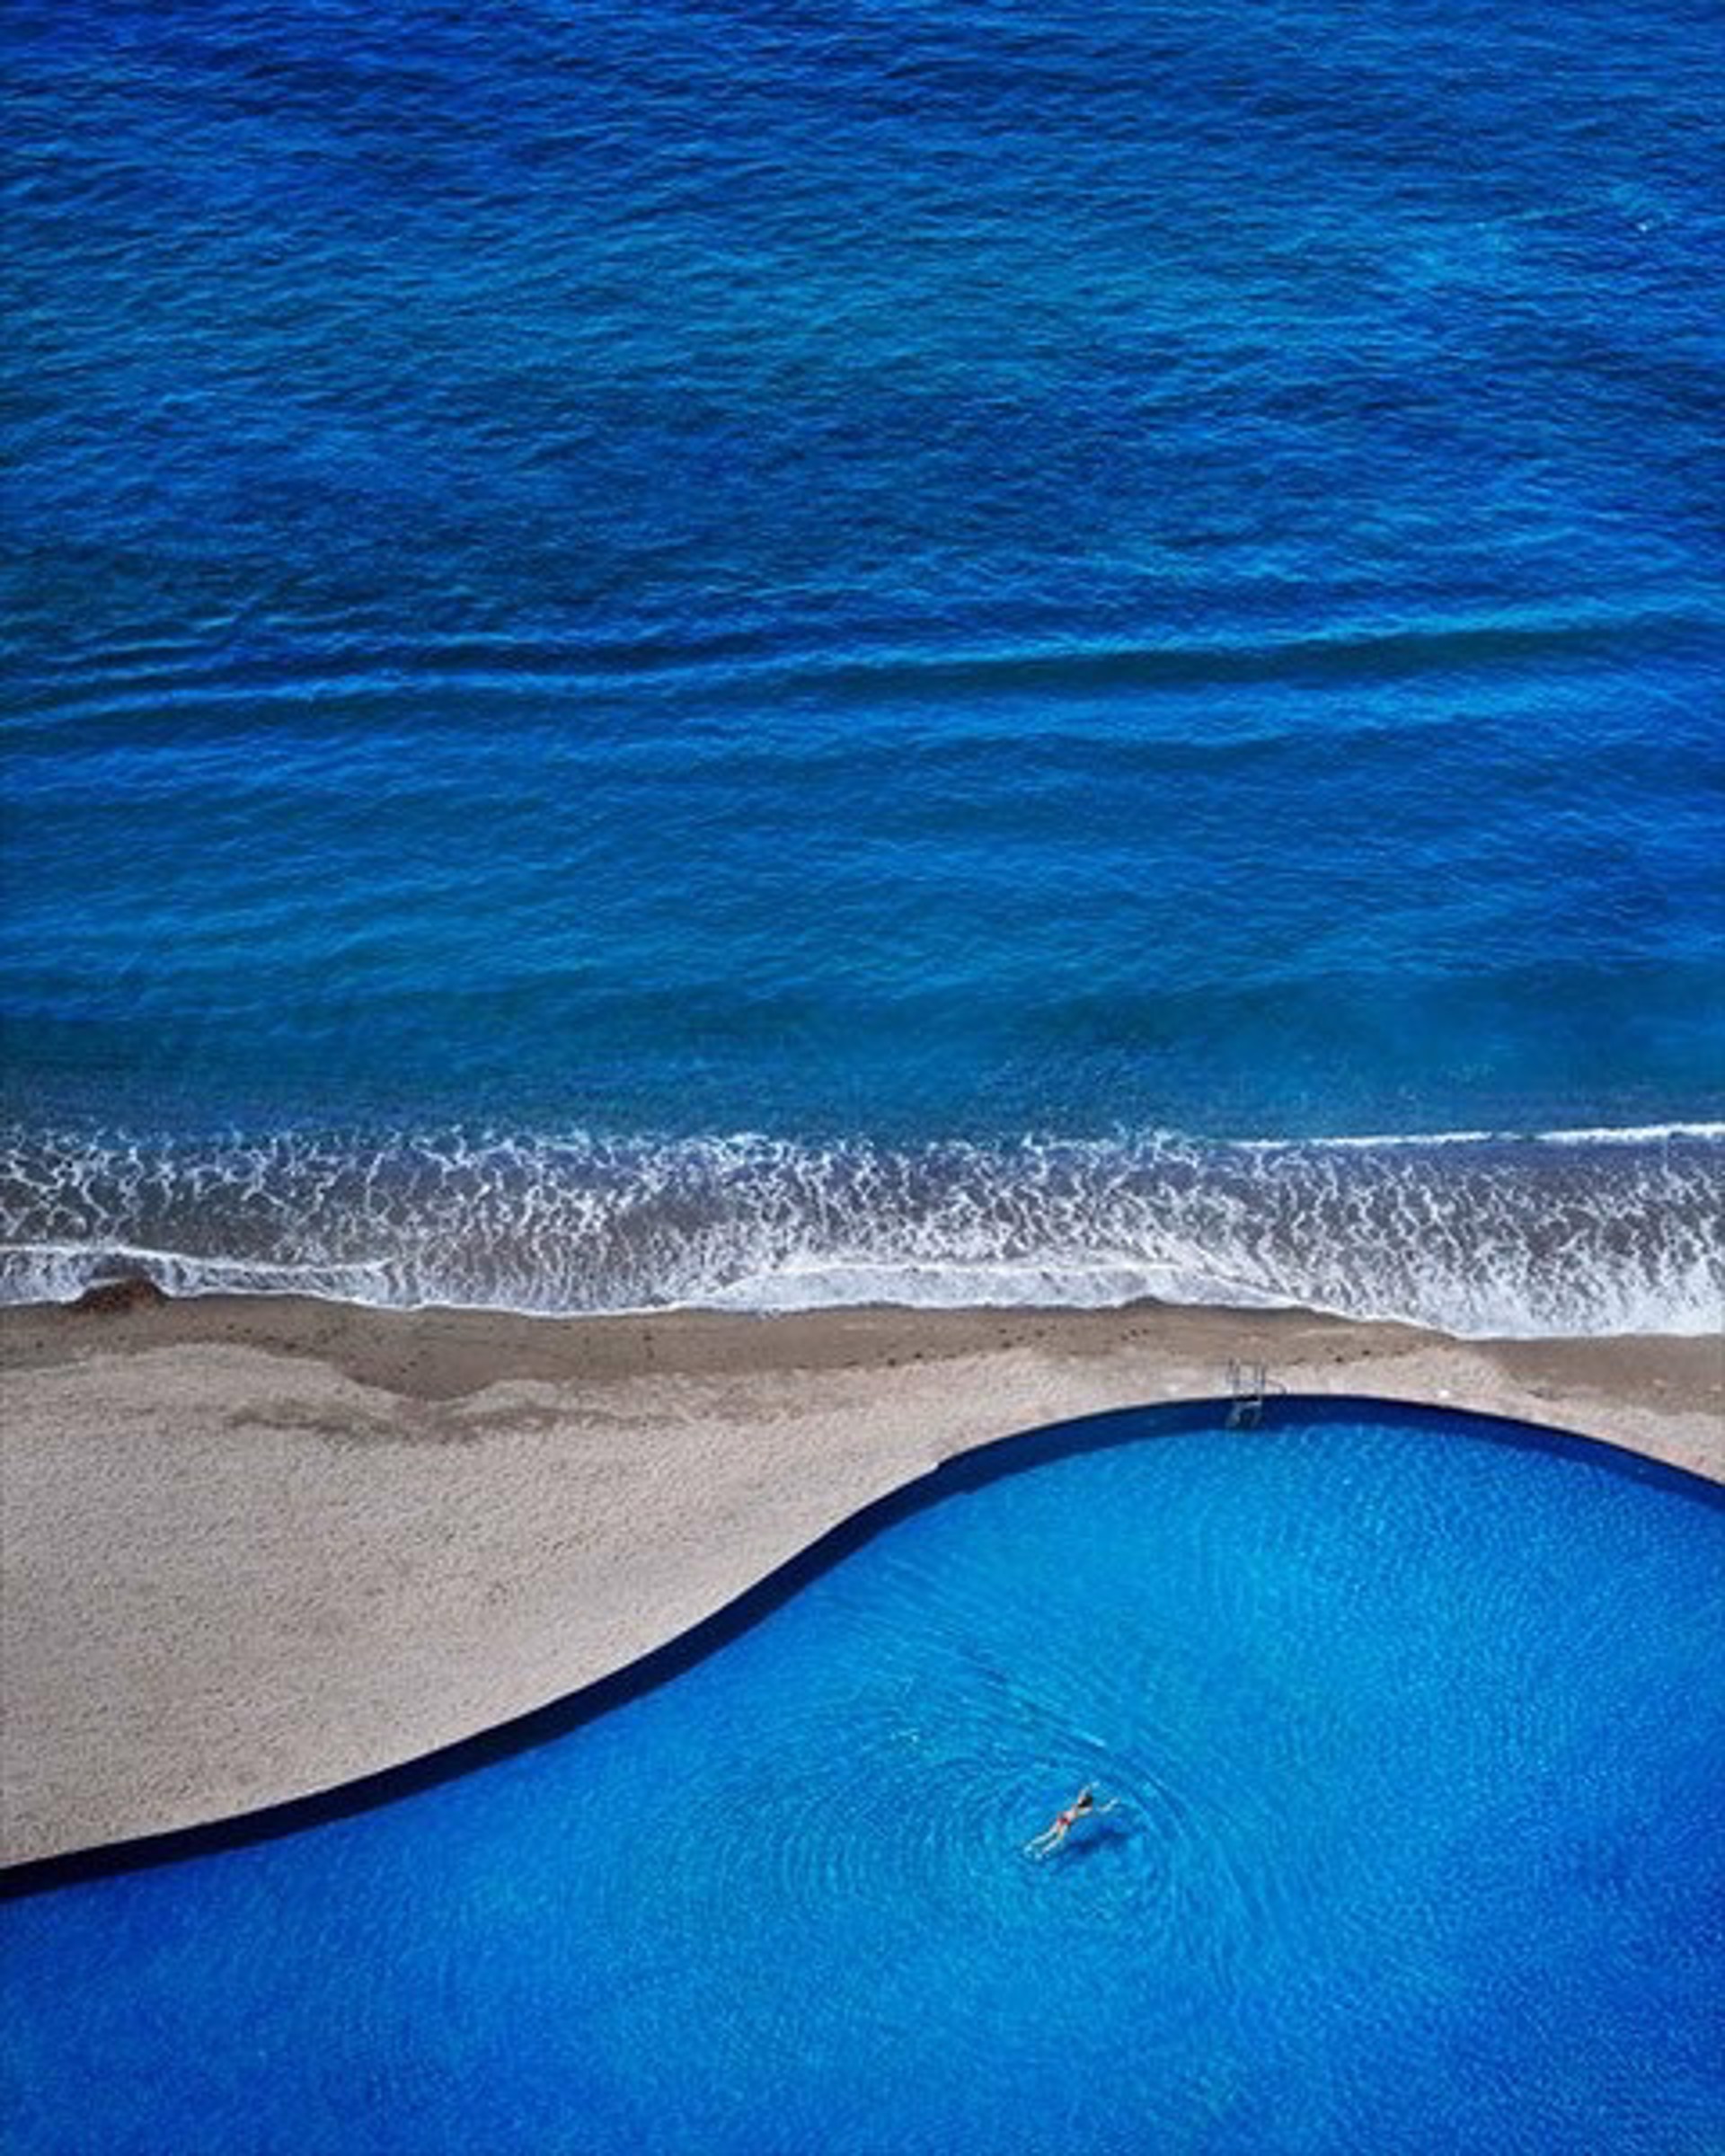 Blue Dream by David Drebin